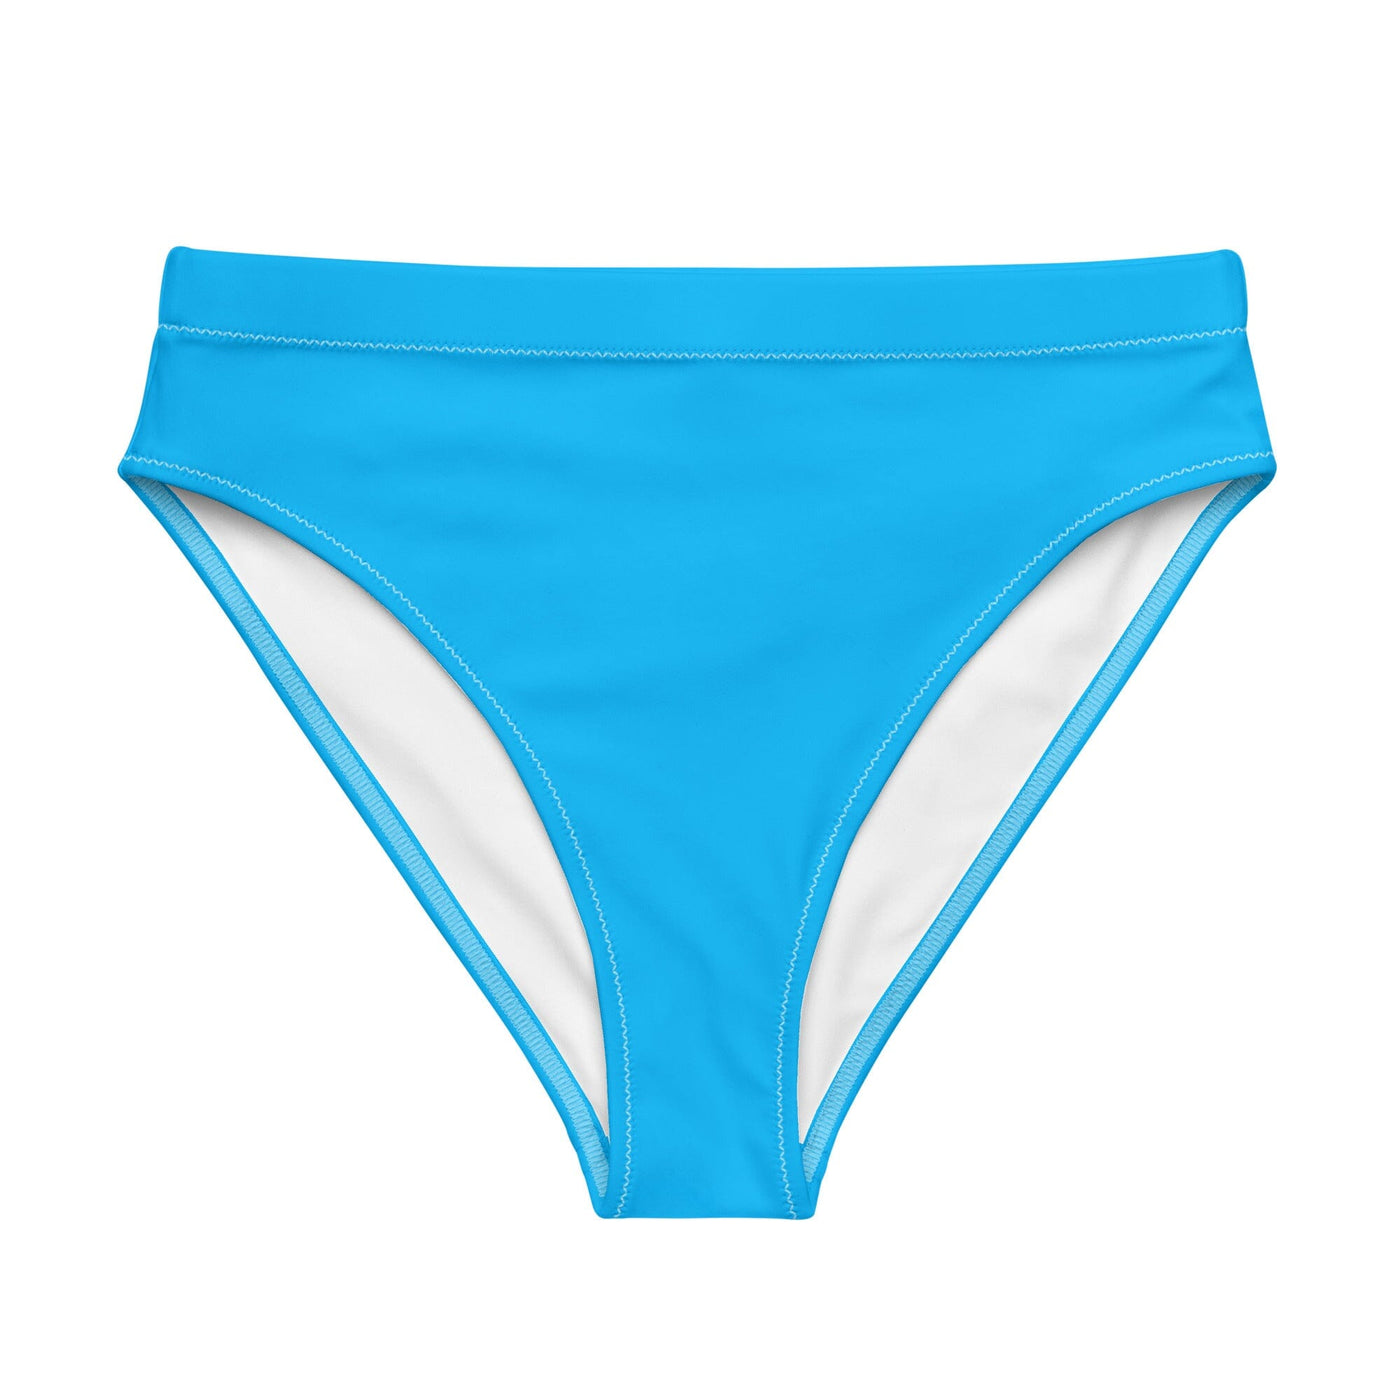 Deep Blue Bikini Bottom - Coastal Cool - Swimwear and Beachwear - Recycled fabrics